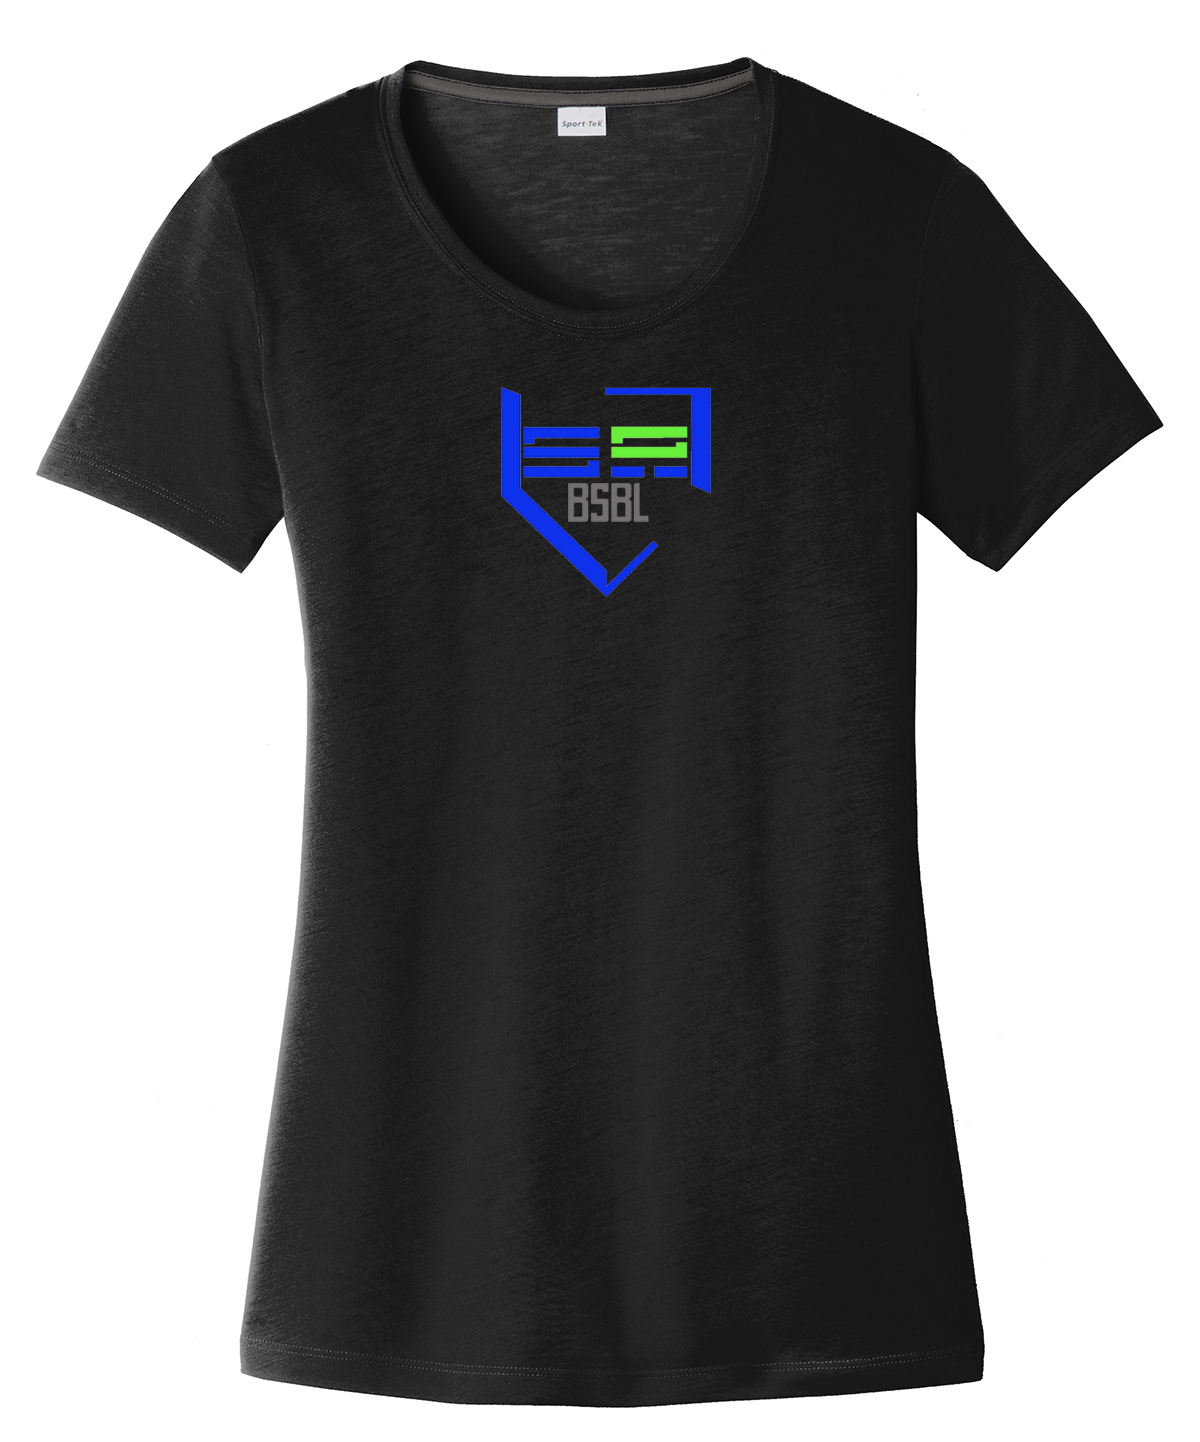 Synergy Athletics Baseball Women's CottonTouch Performance T-Shirt